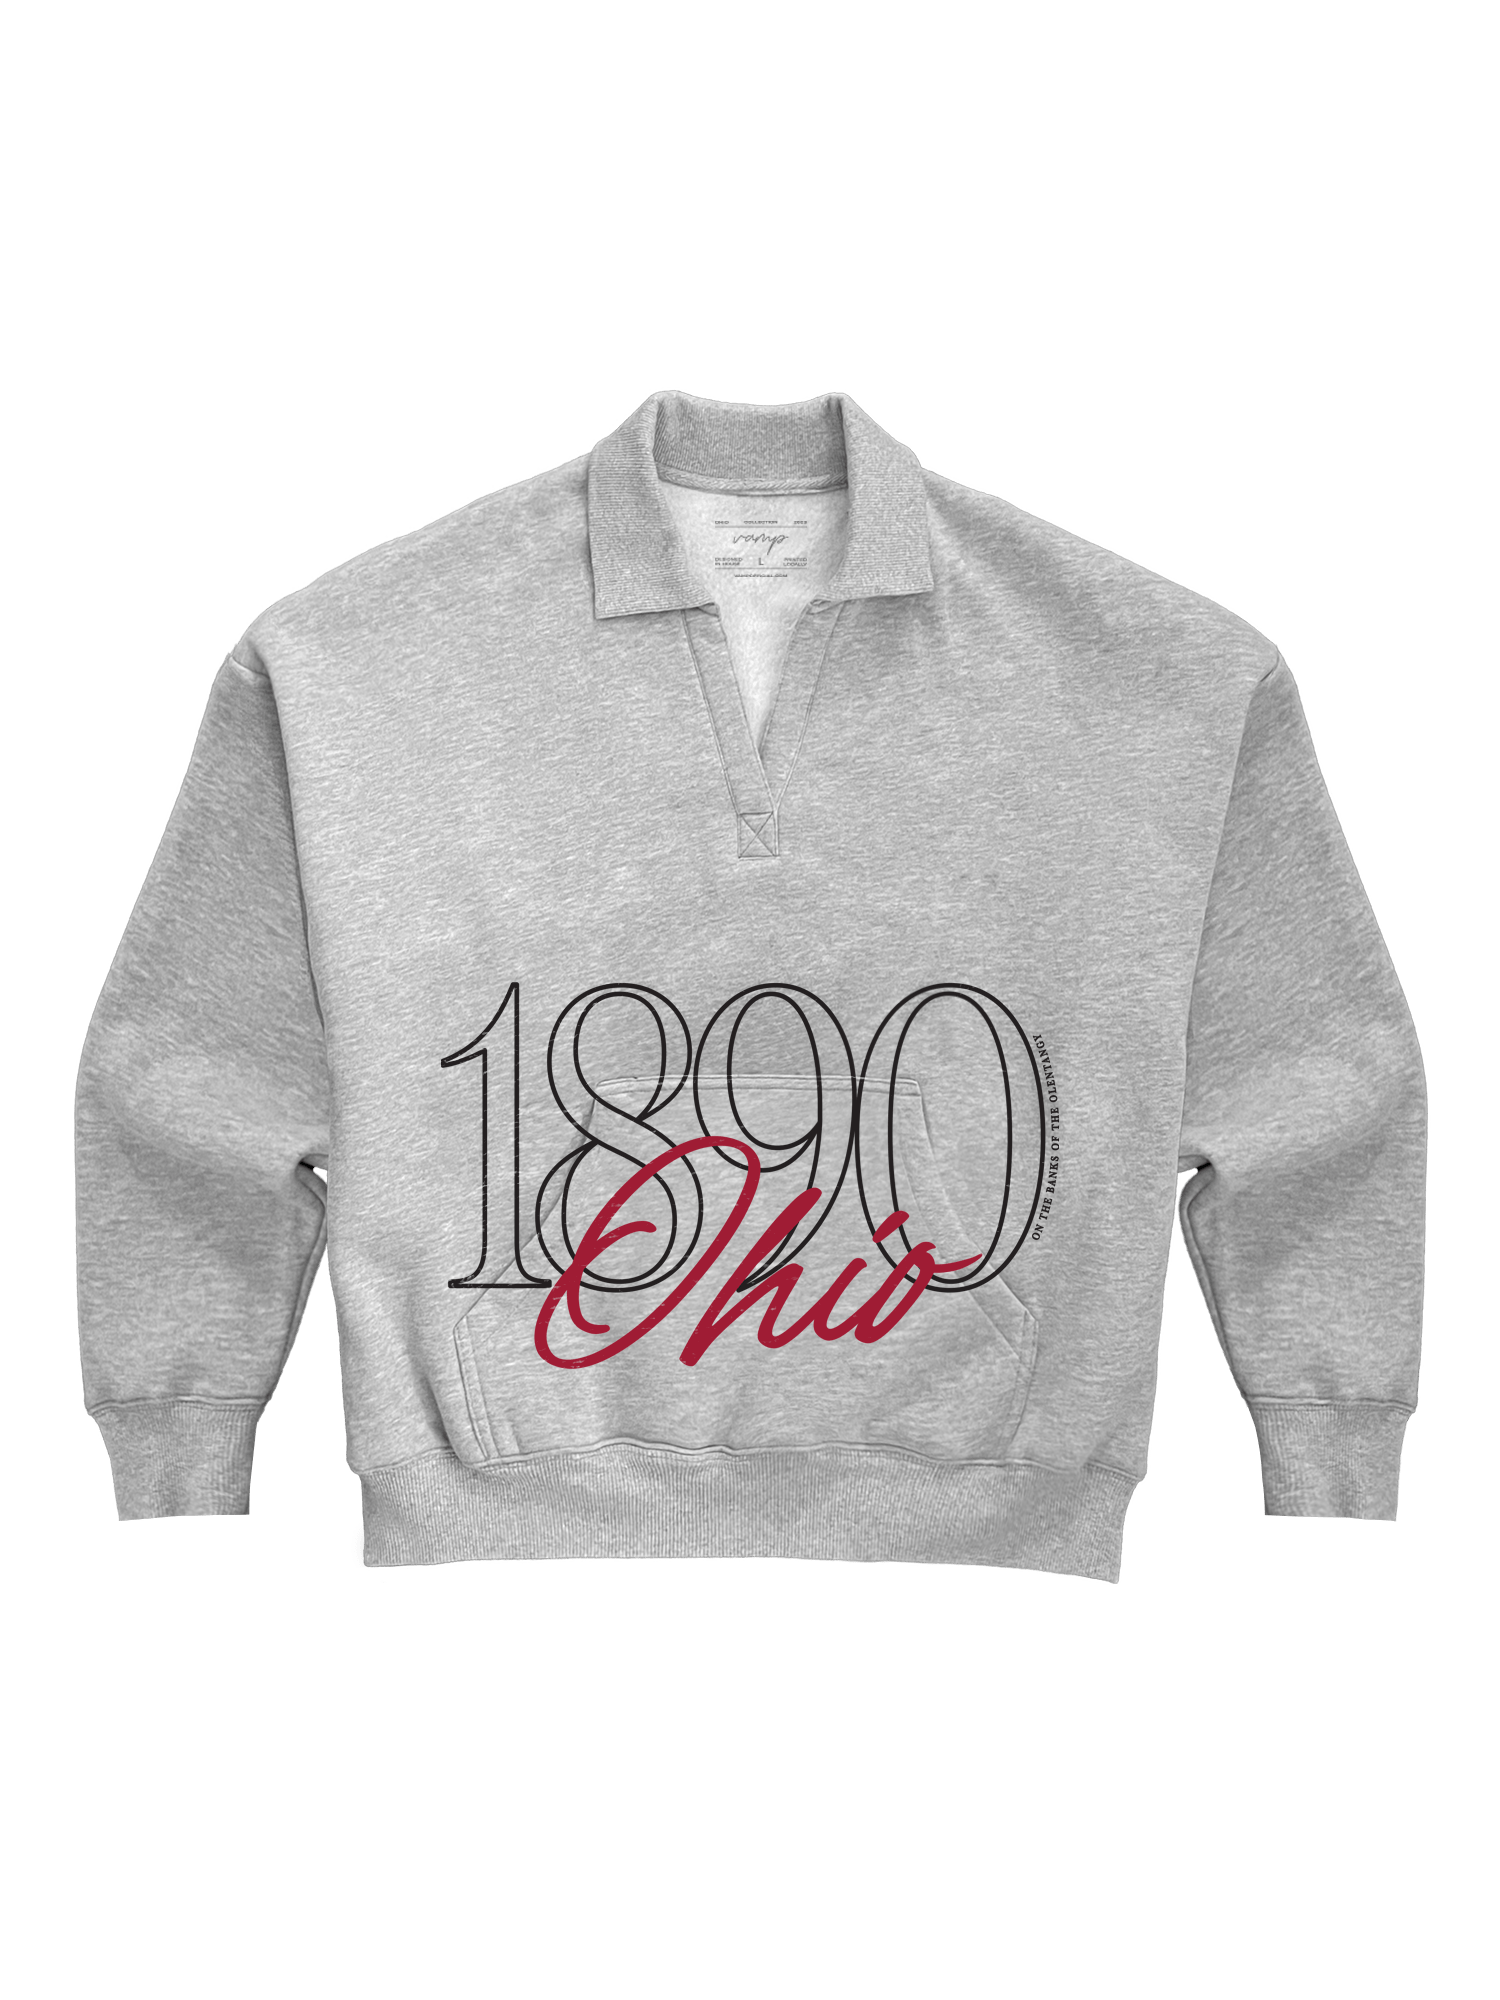 1890 Ohio Polo Sweatshirt - Vamp Official